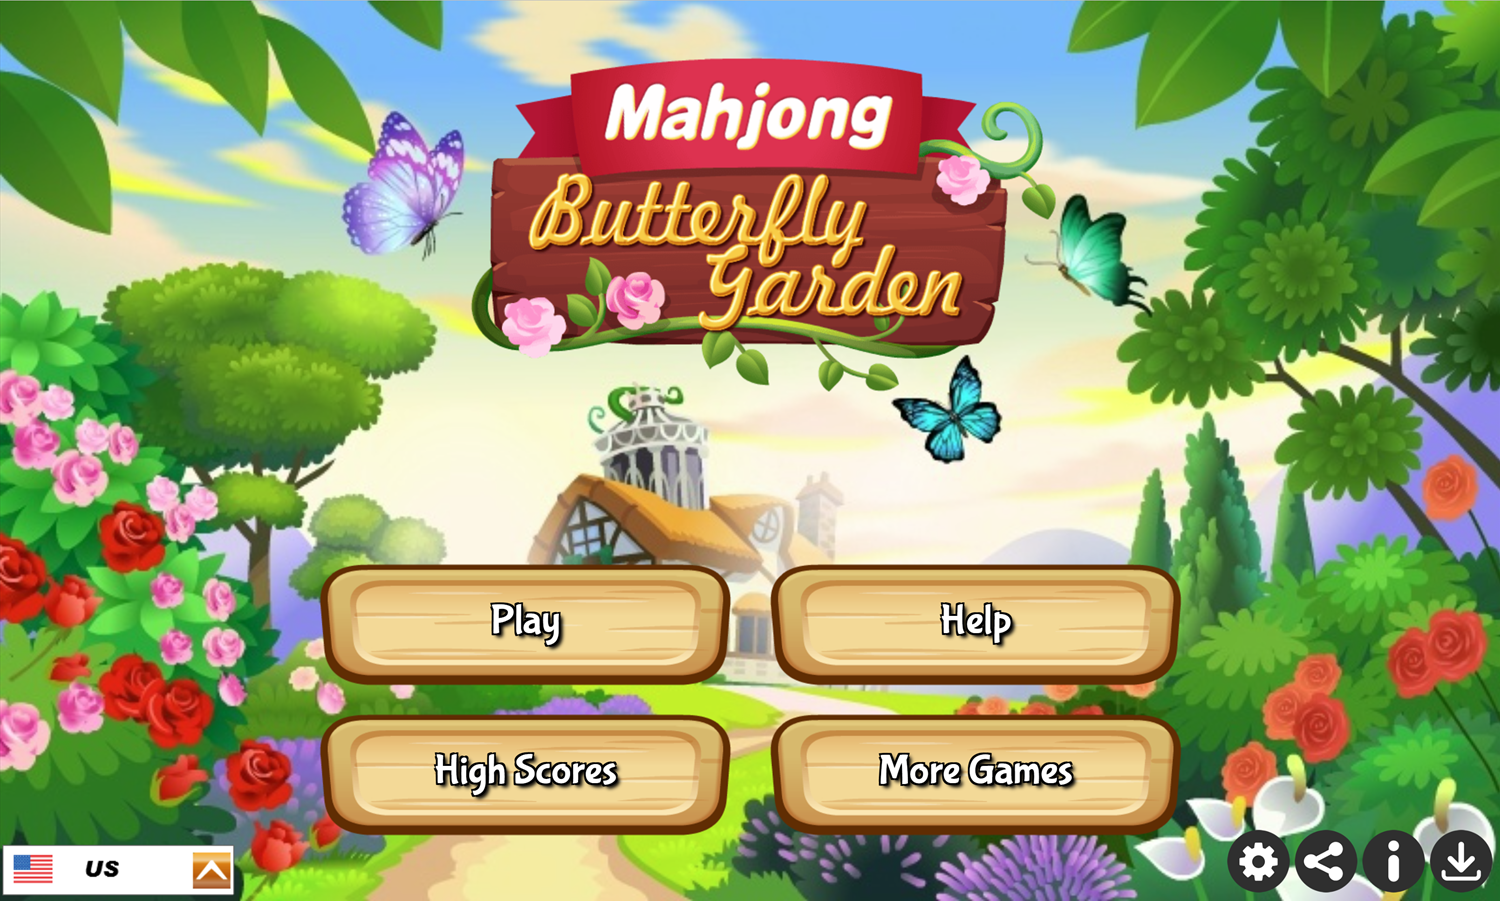 Mahjong Butterfly Garden Game Welcome Screen Screenshot.